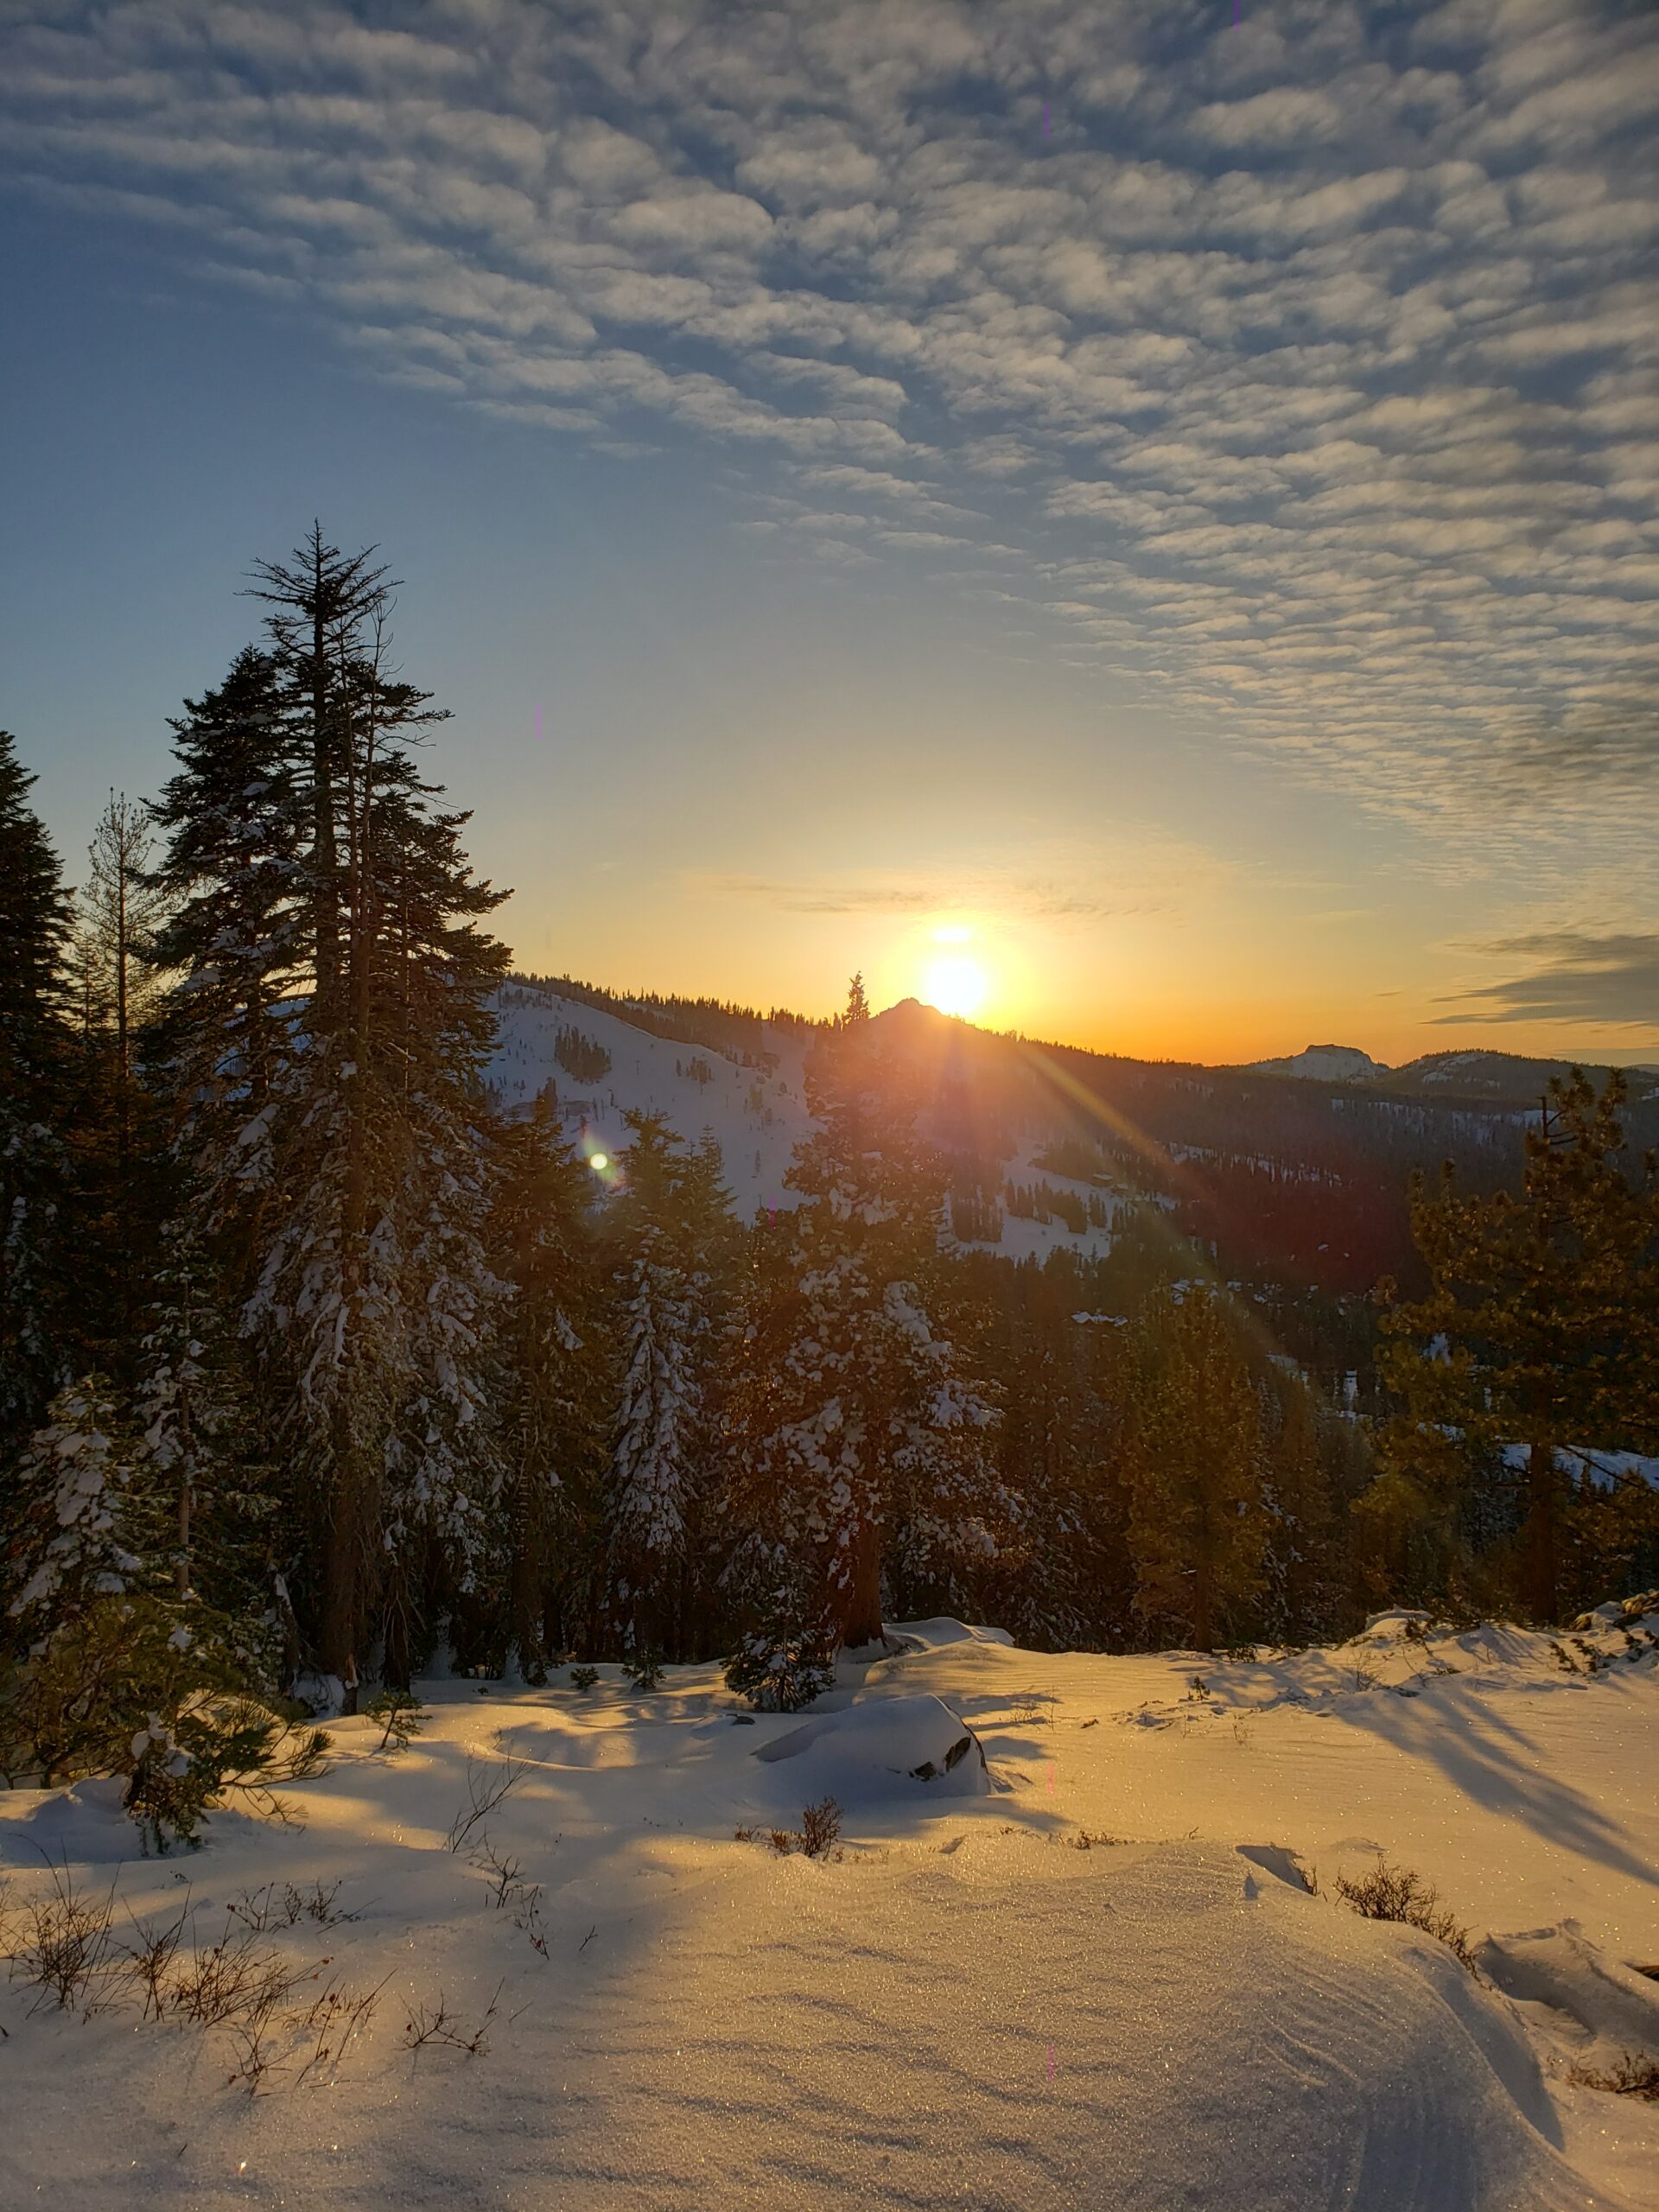 Donner Summit snowshoe hike sunset